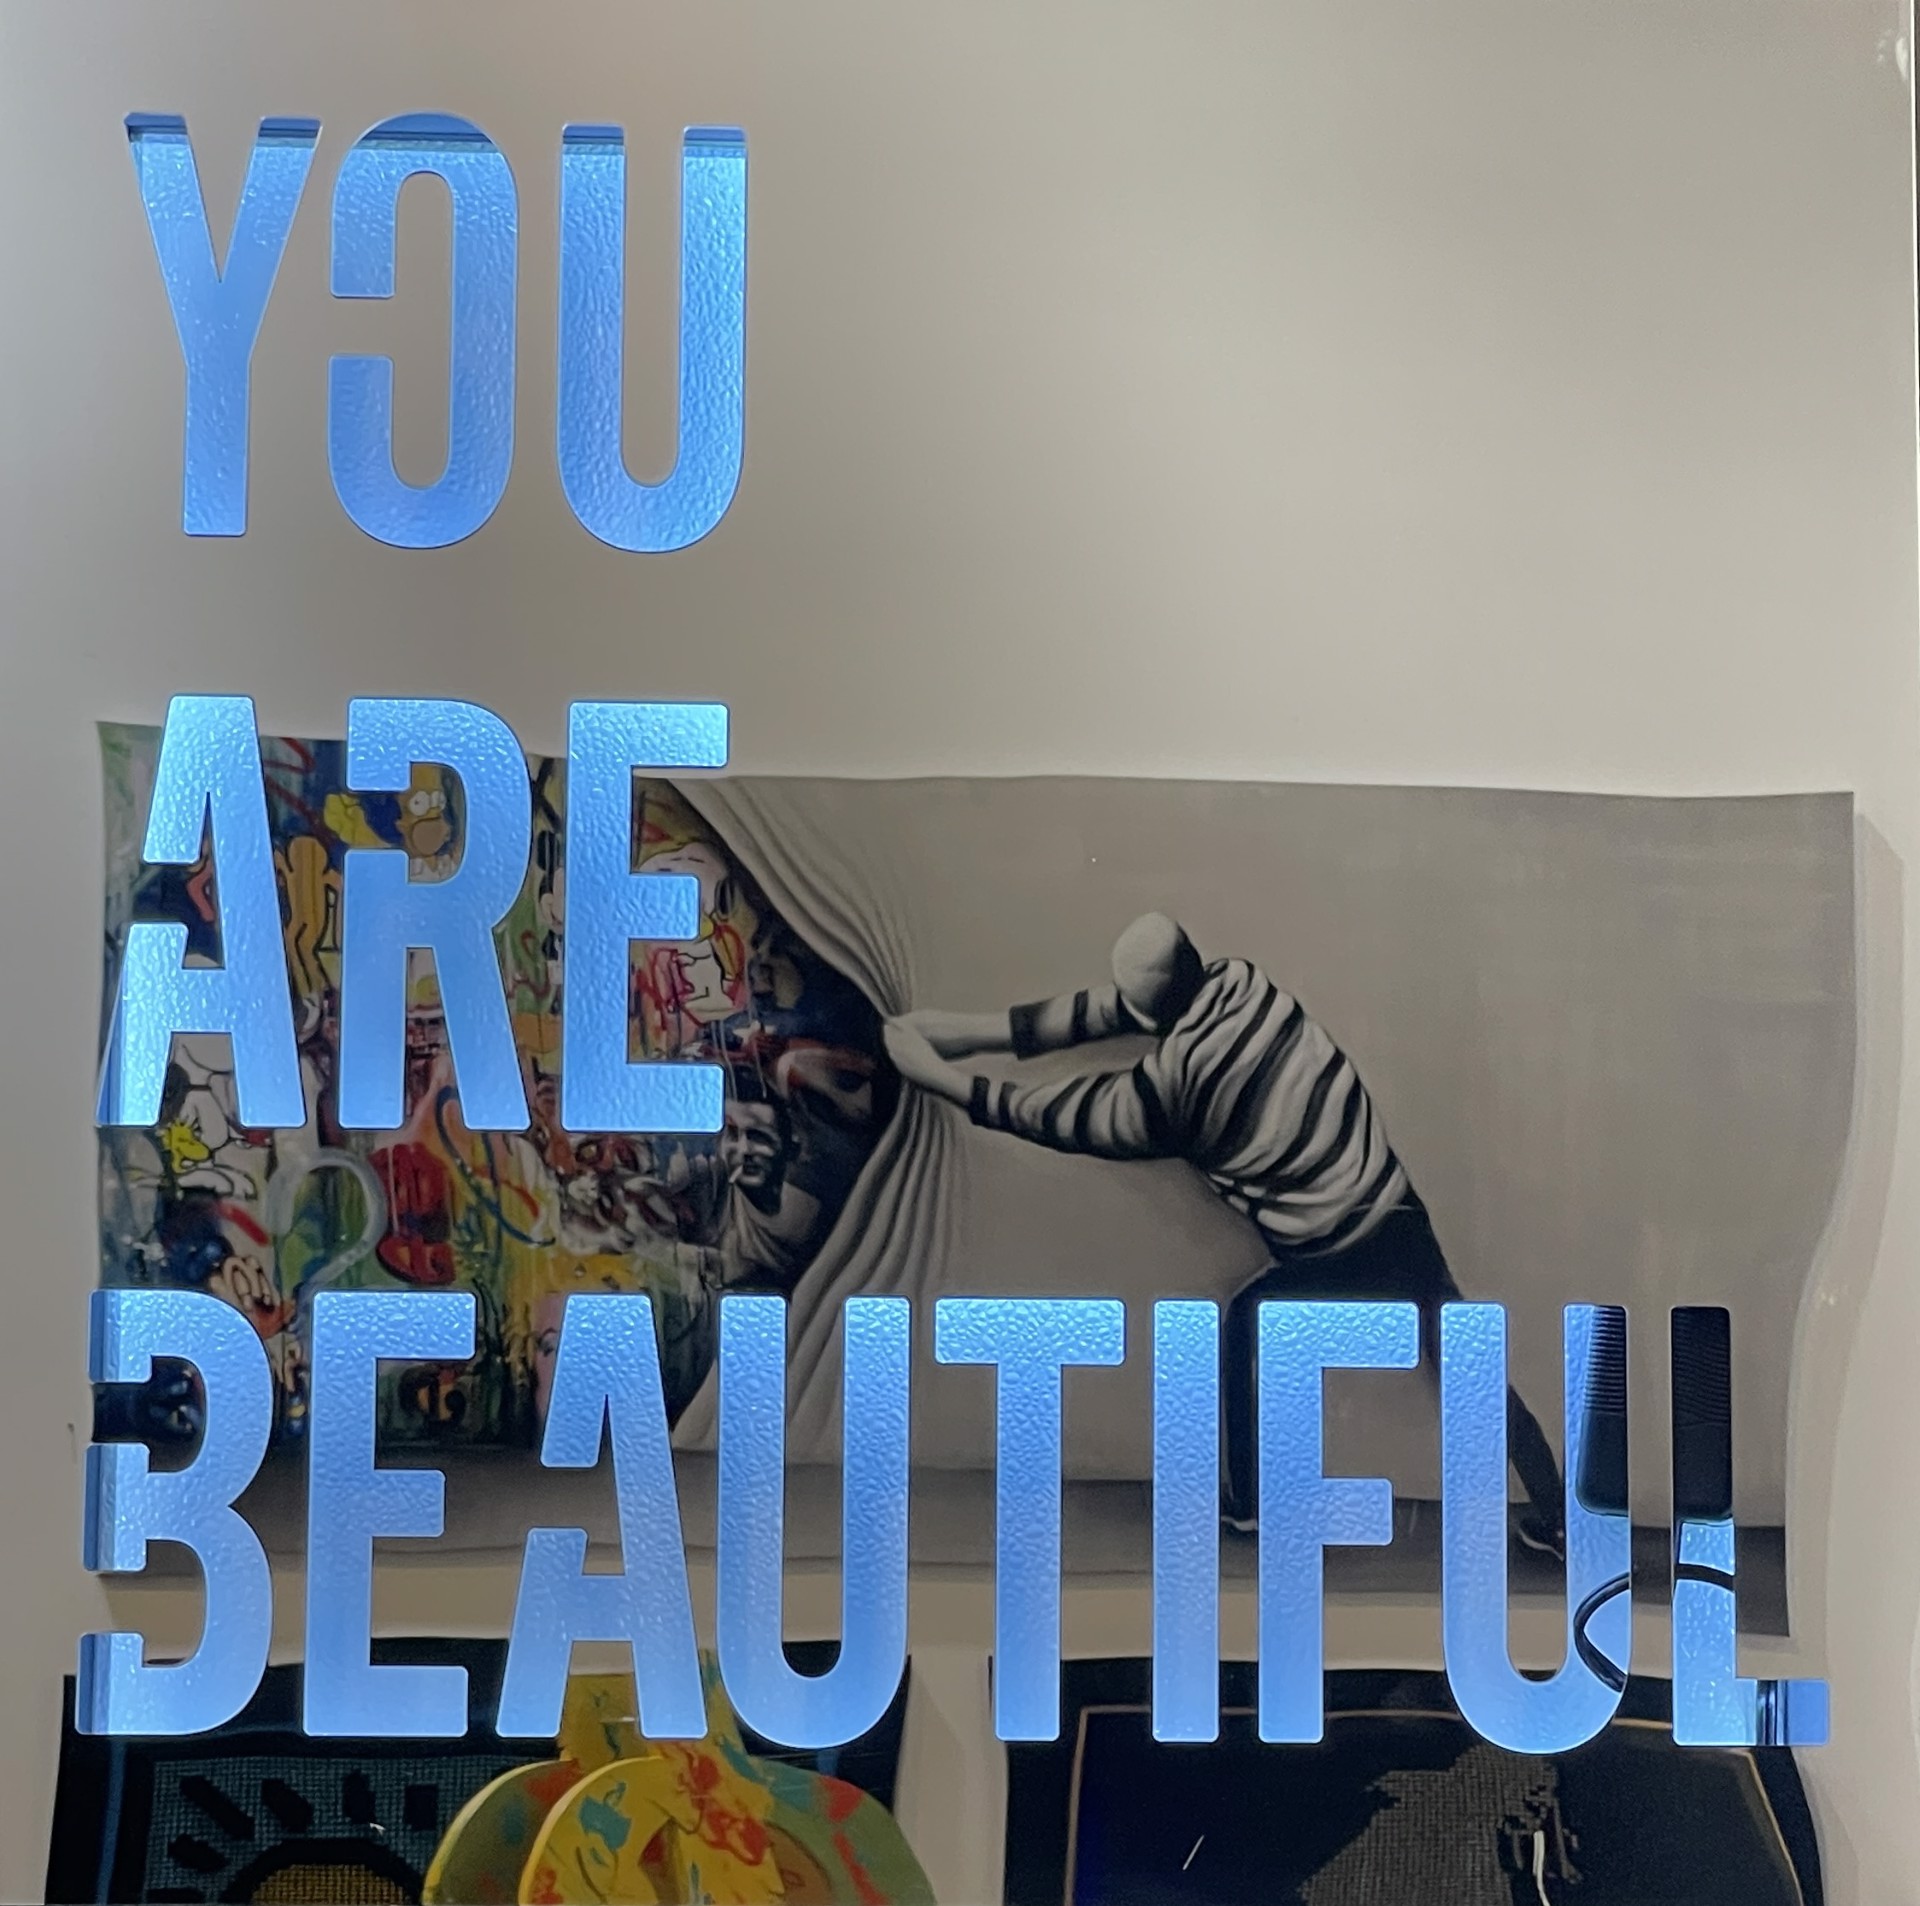 “You are Beautiful” by Affirmative Mirrors Installation by Elena Bulatova